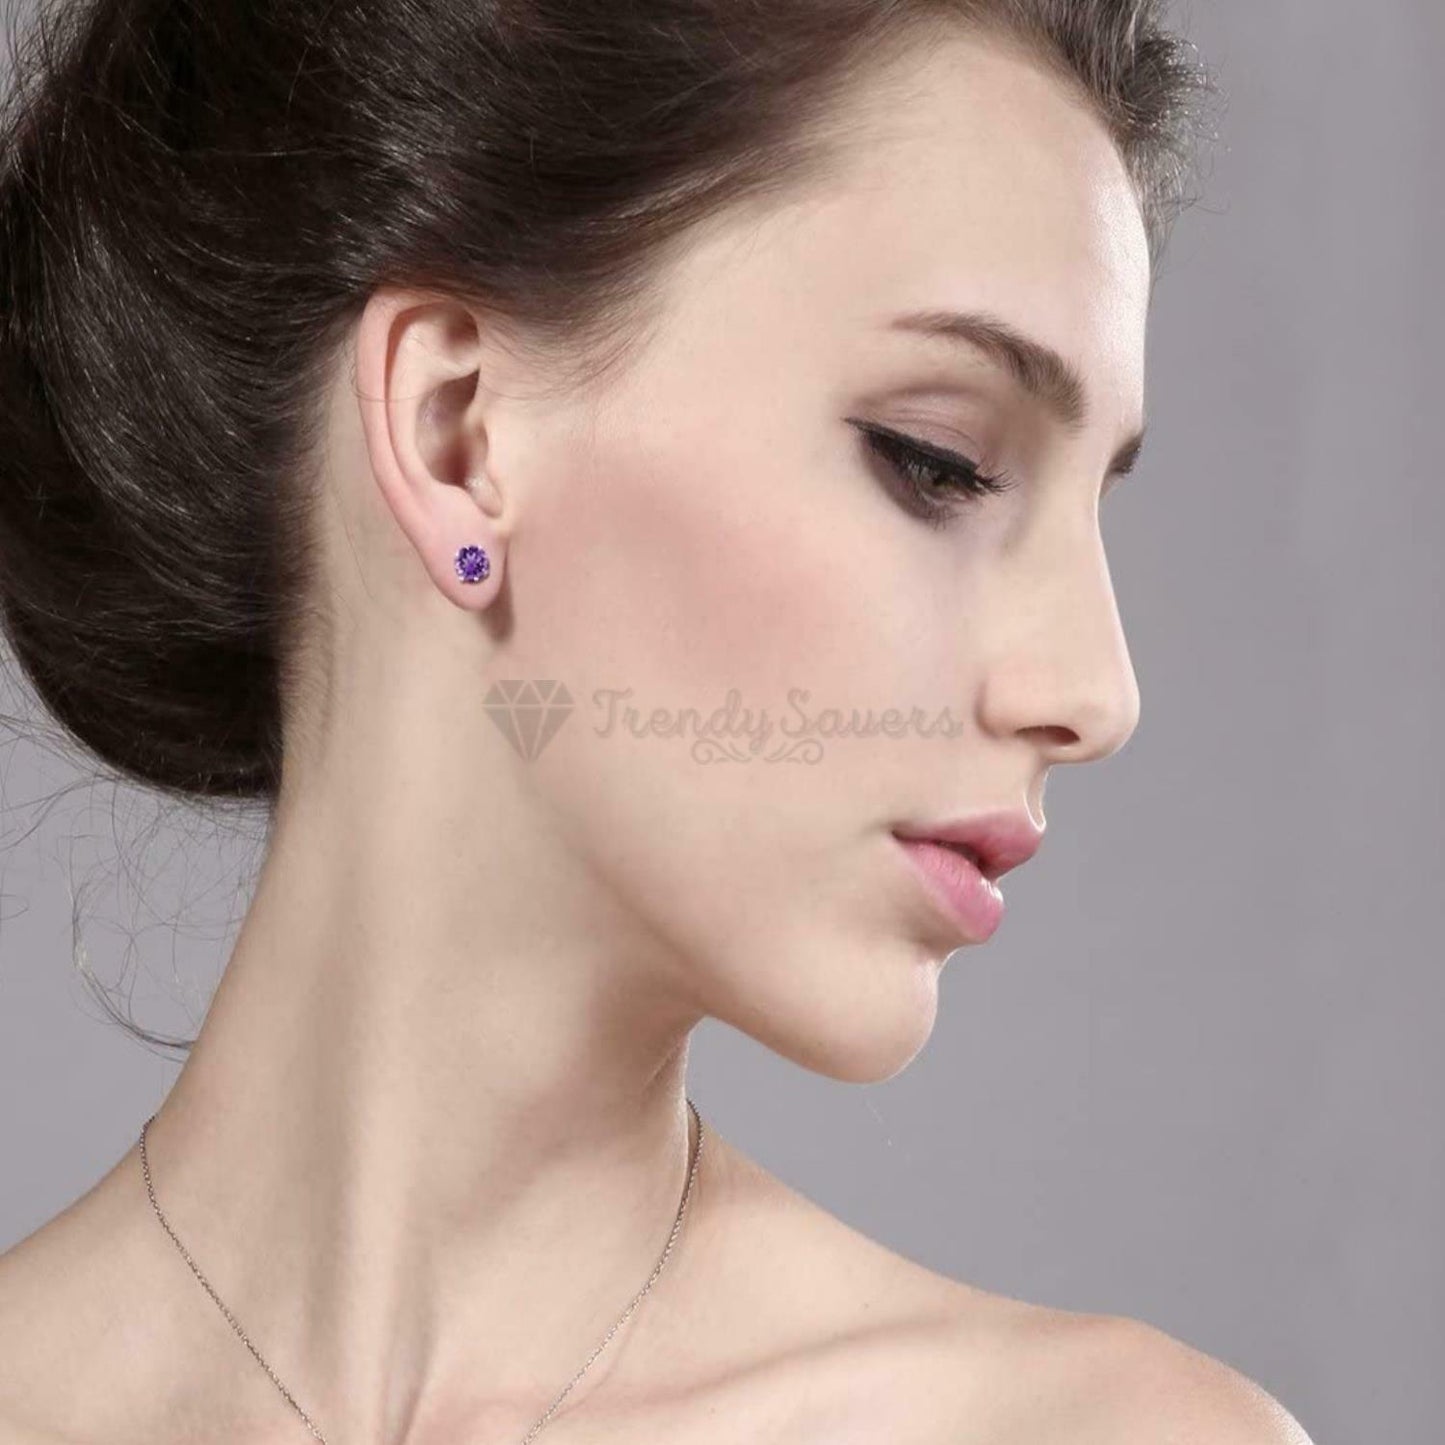 6MM Premium Quality Purple Amethyst Sleeper Stud Surgical Steel Earrings Jewelry